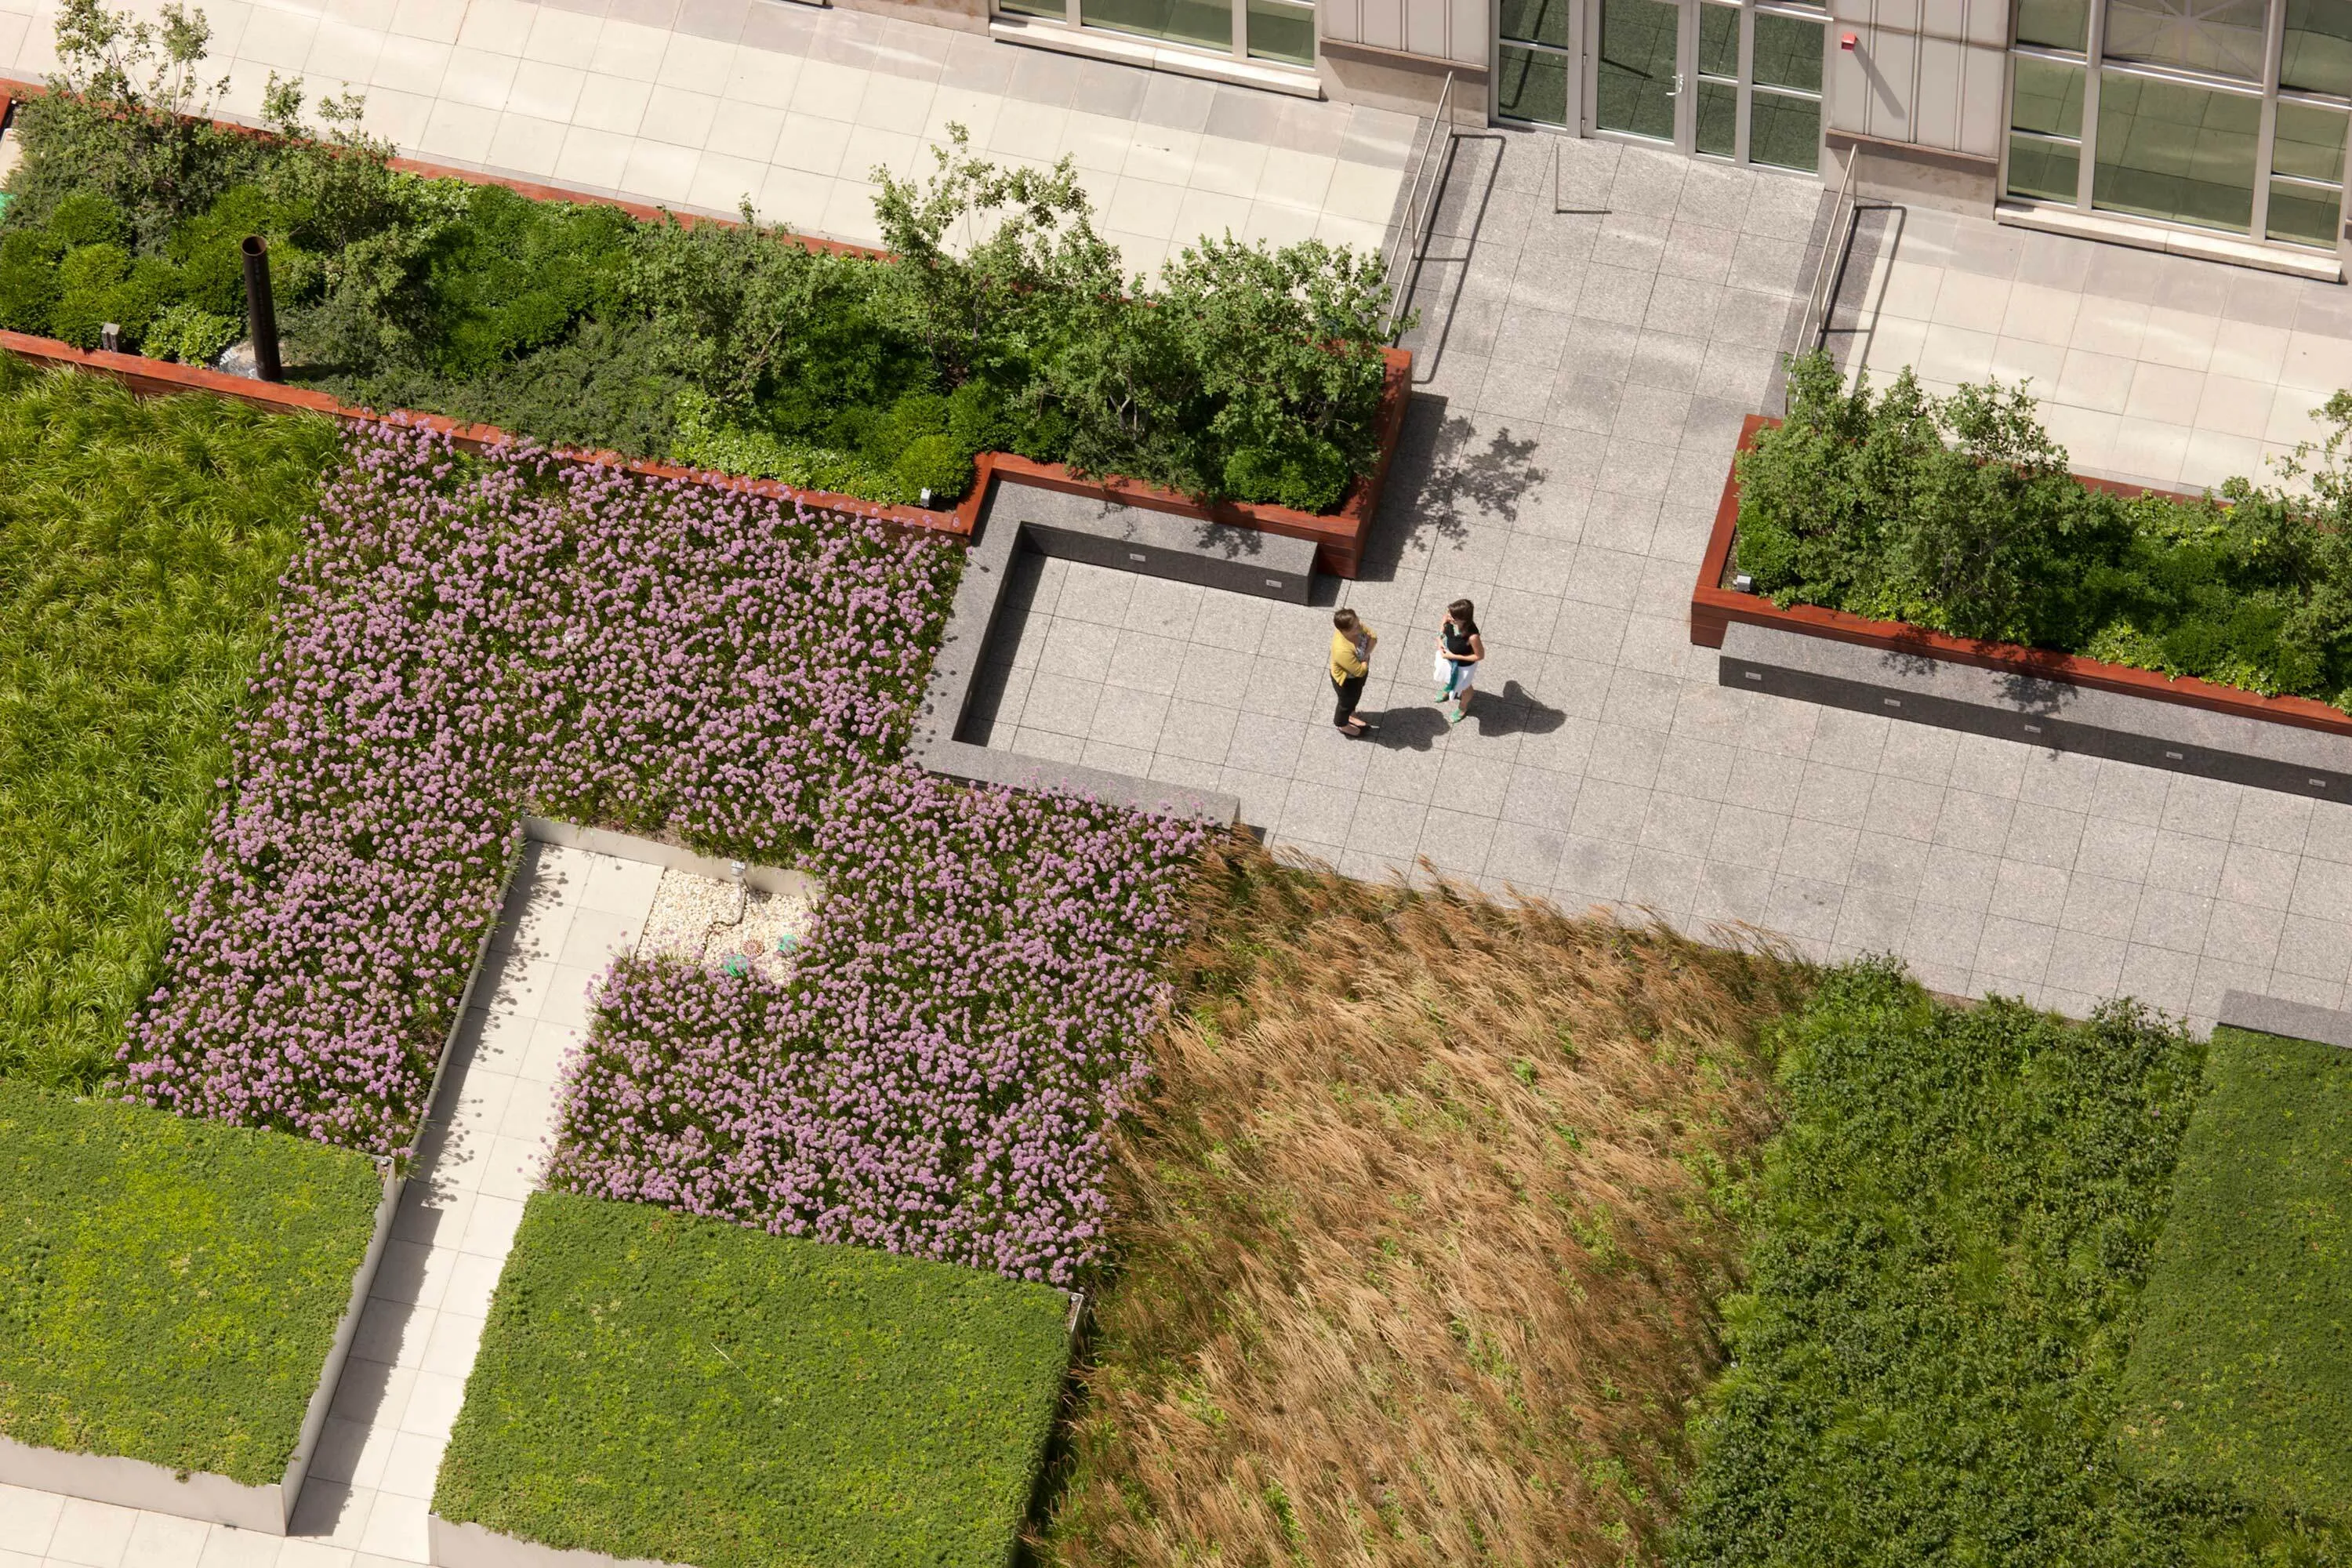 11 drone people flowers patchwork 900 nmichiganave rooftop hoerrschaudt